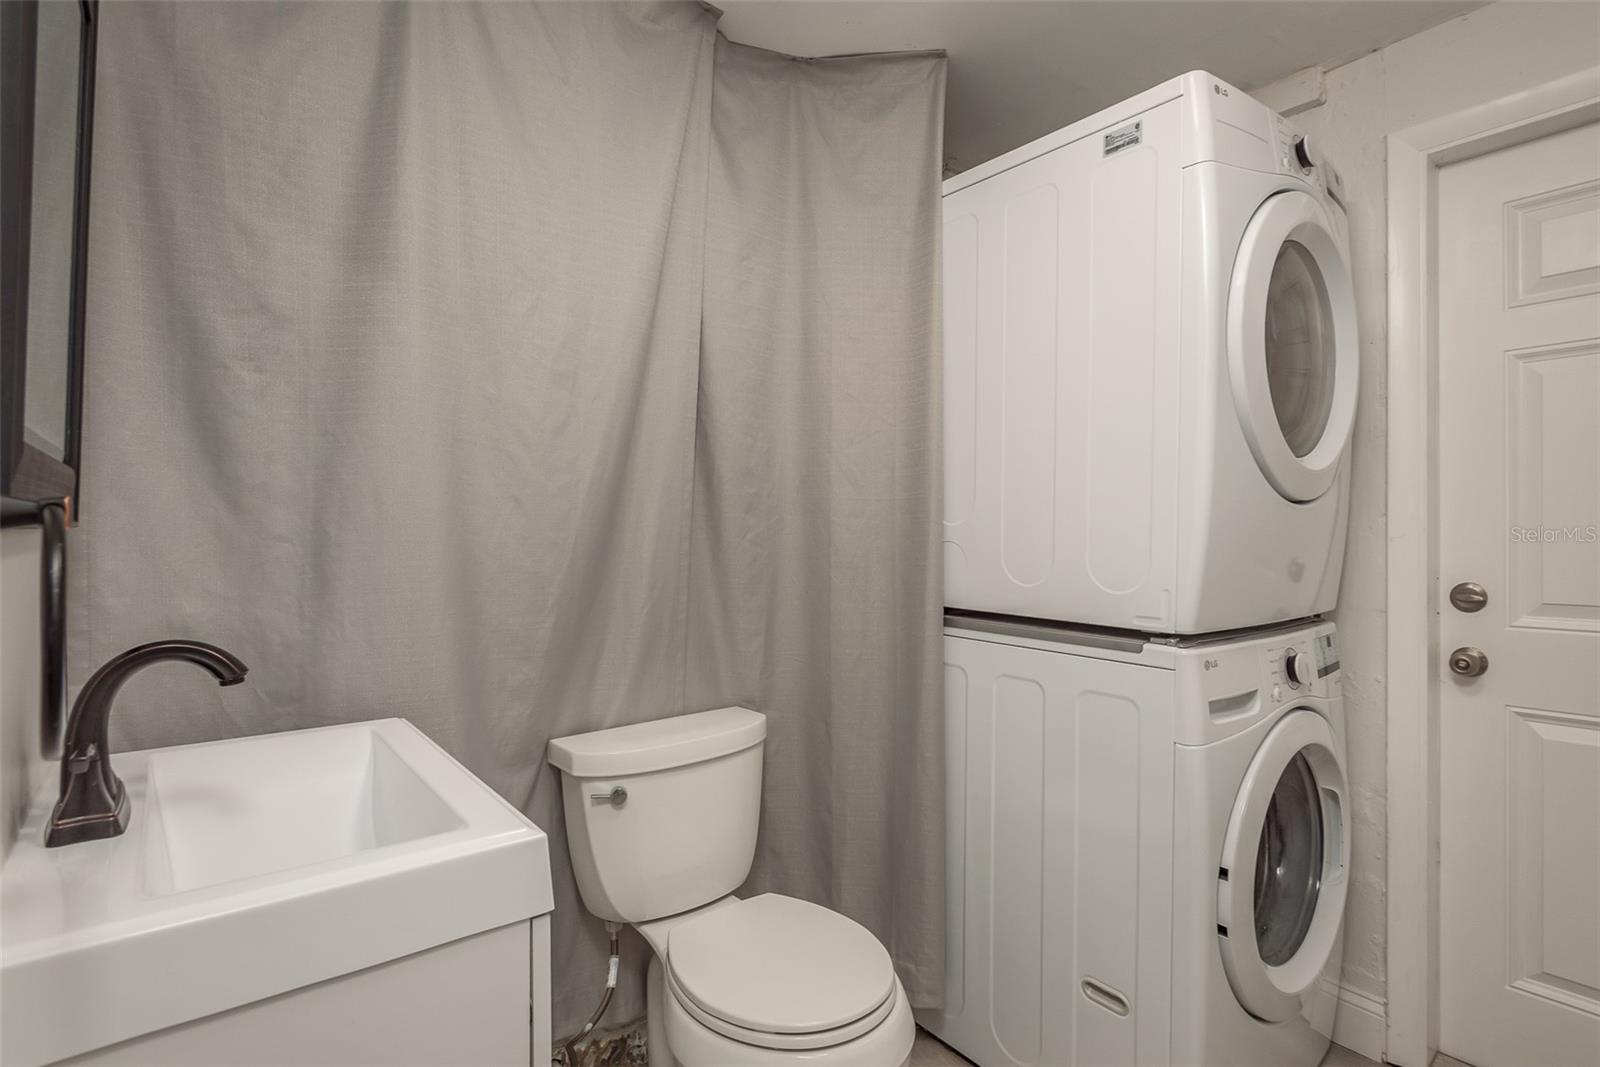 Laundry Room is part of Half Bathroom